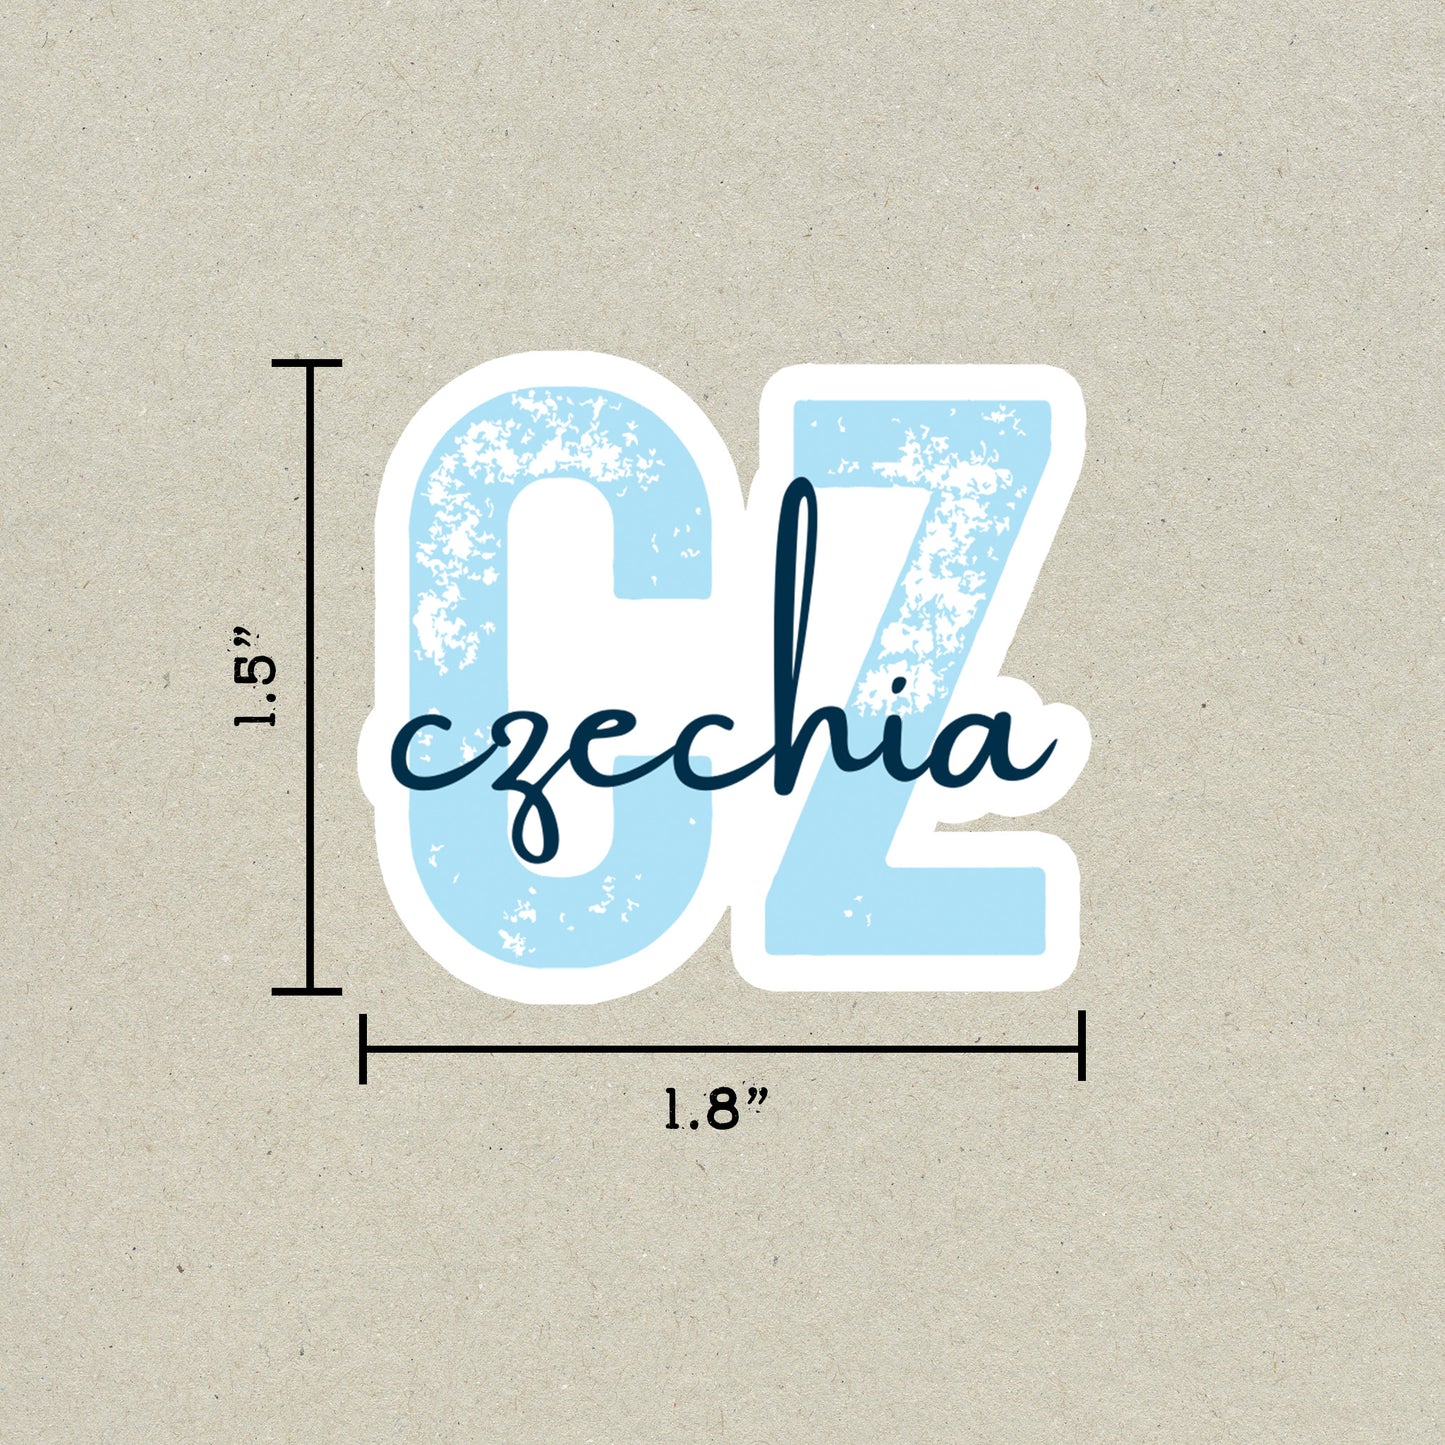 Czechia Country Code Sticker